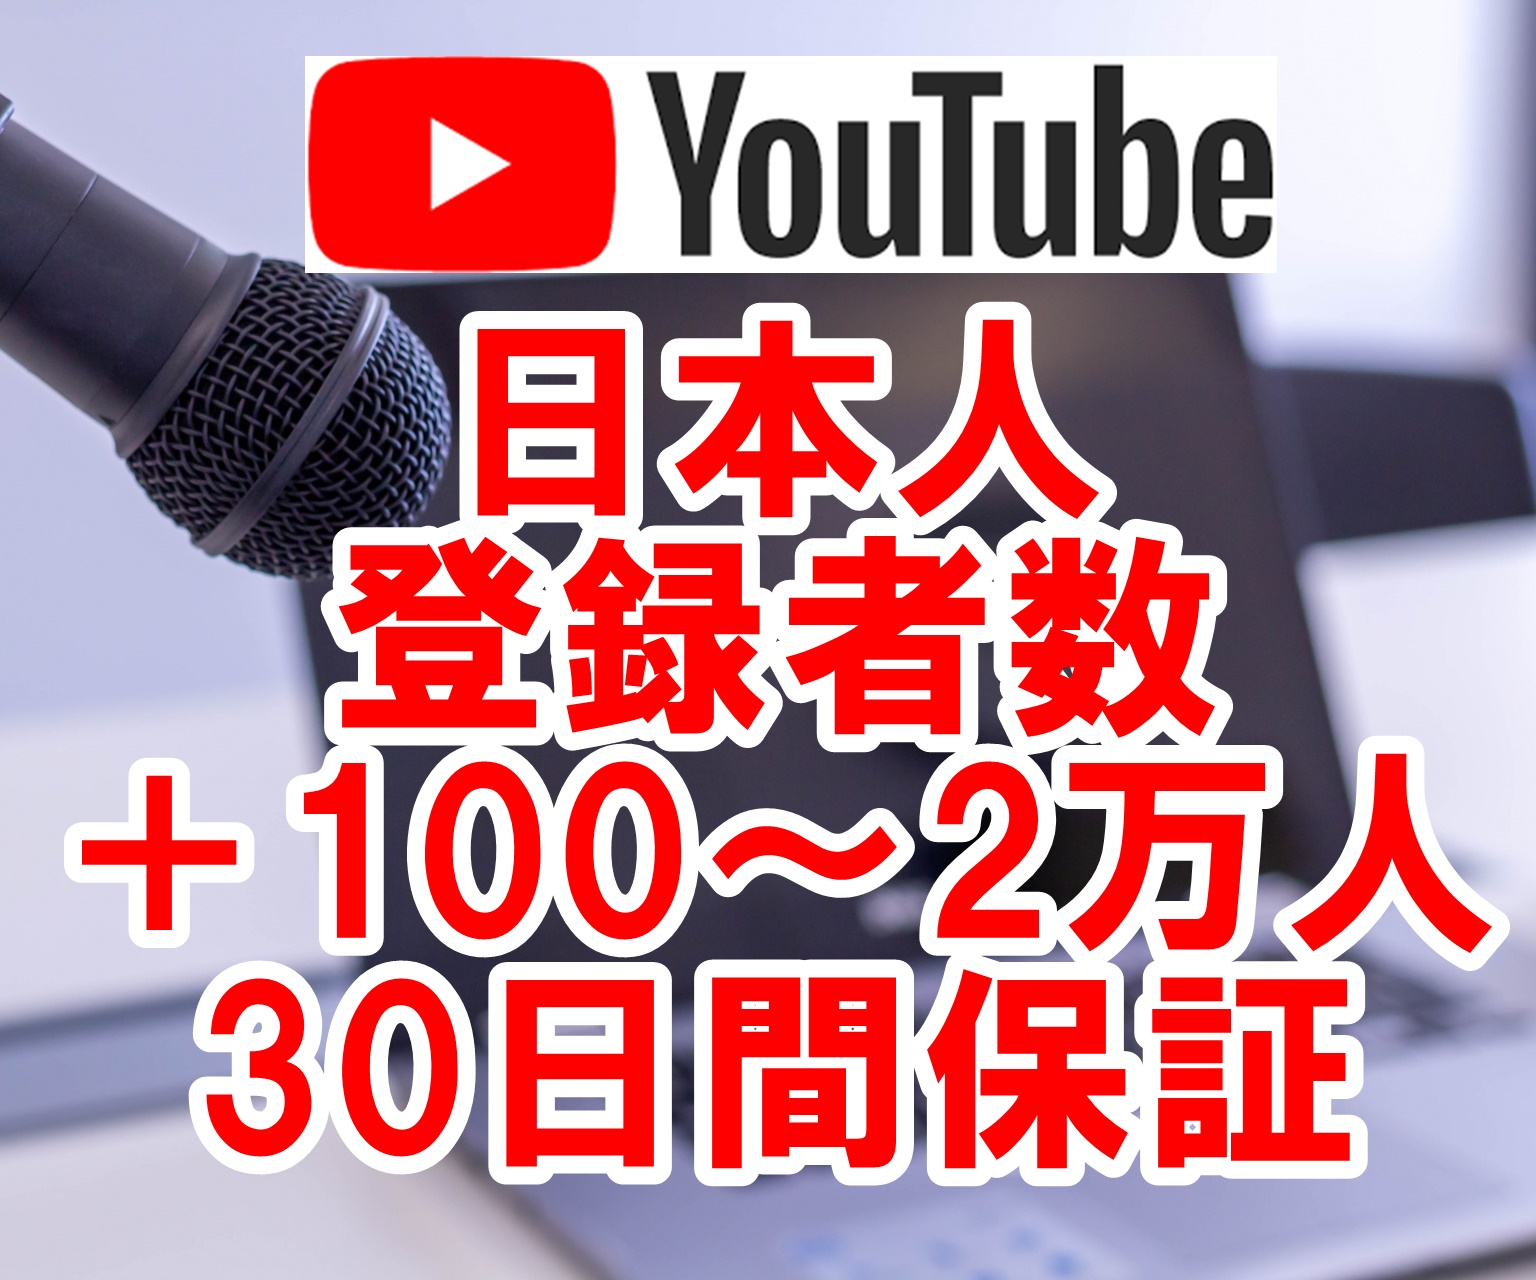 YouTubeチャンネル日本人登録者数を増やすまで宣伝します